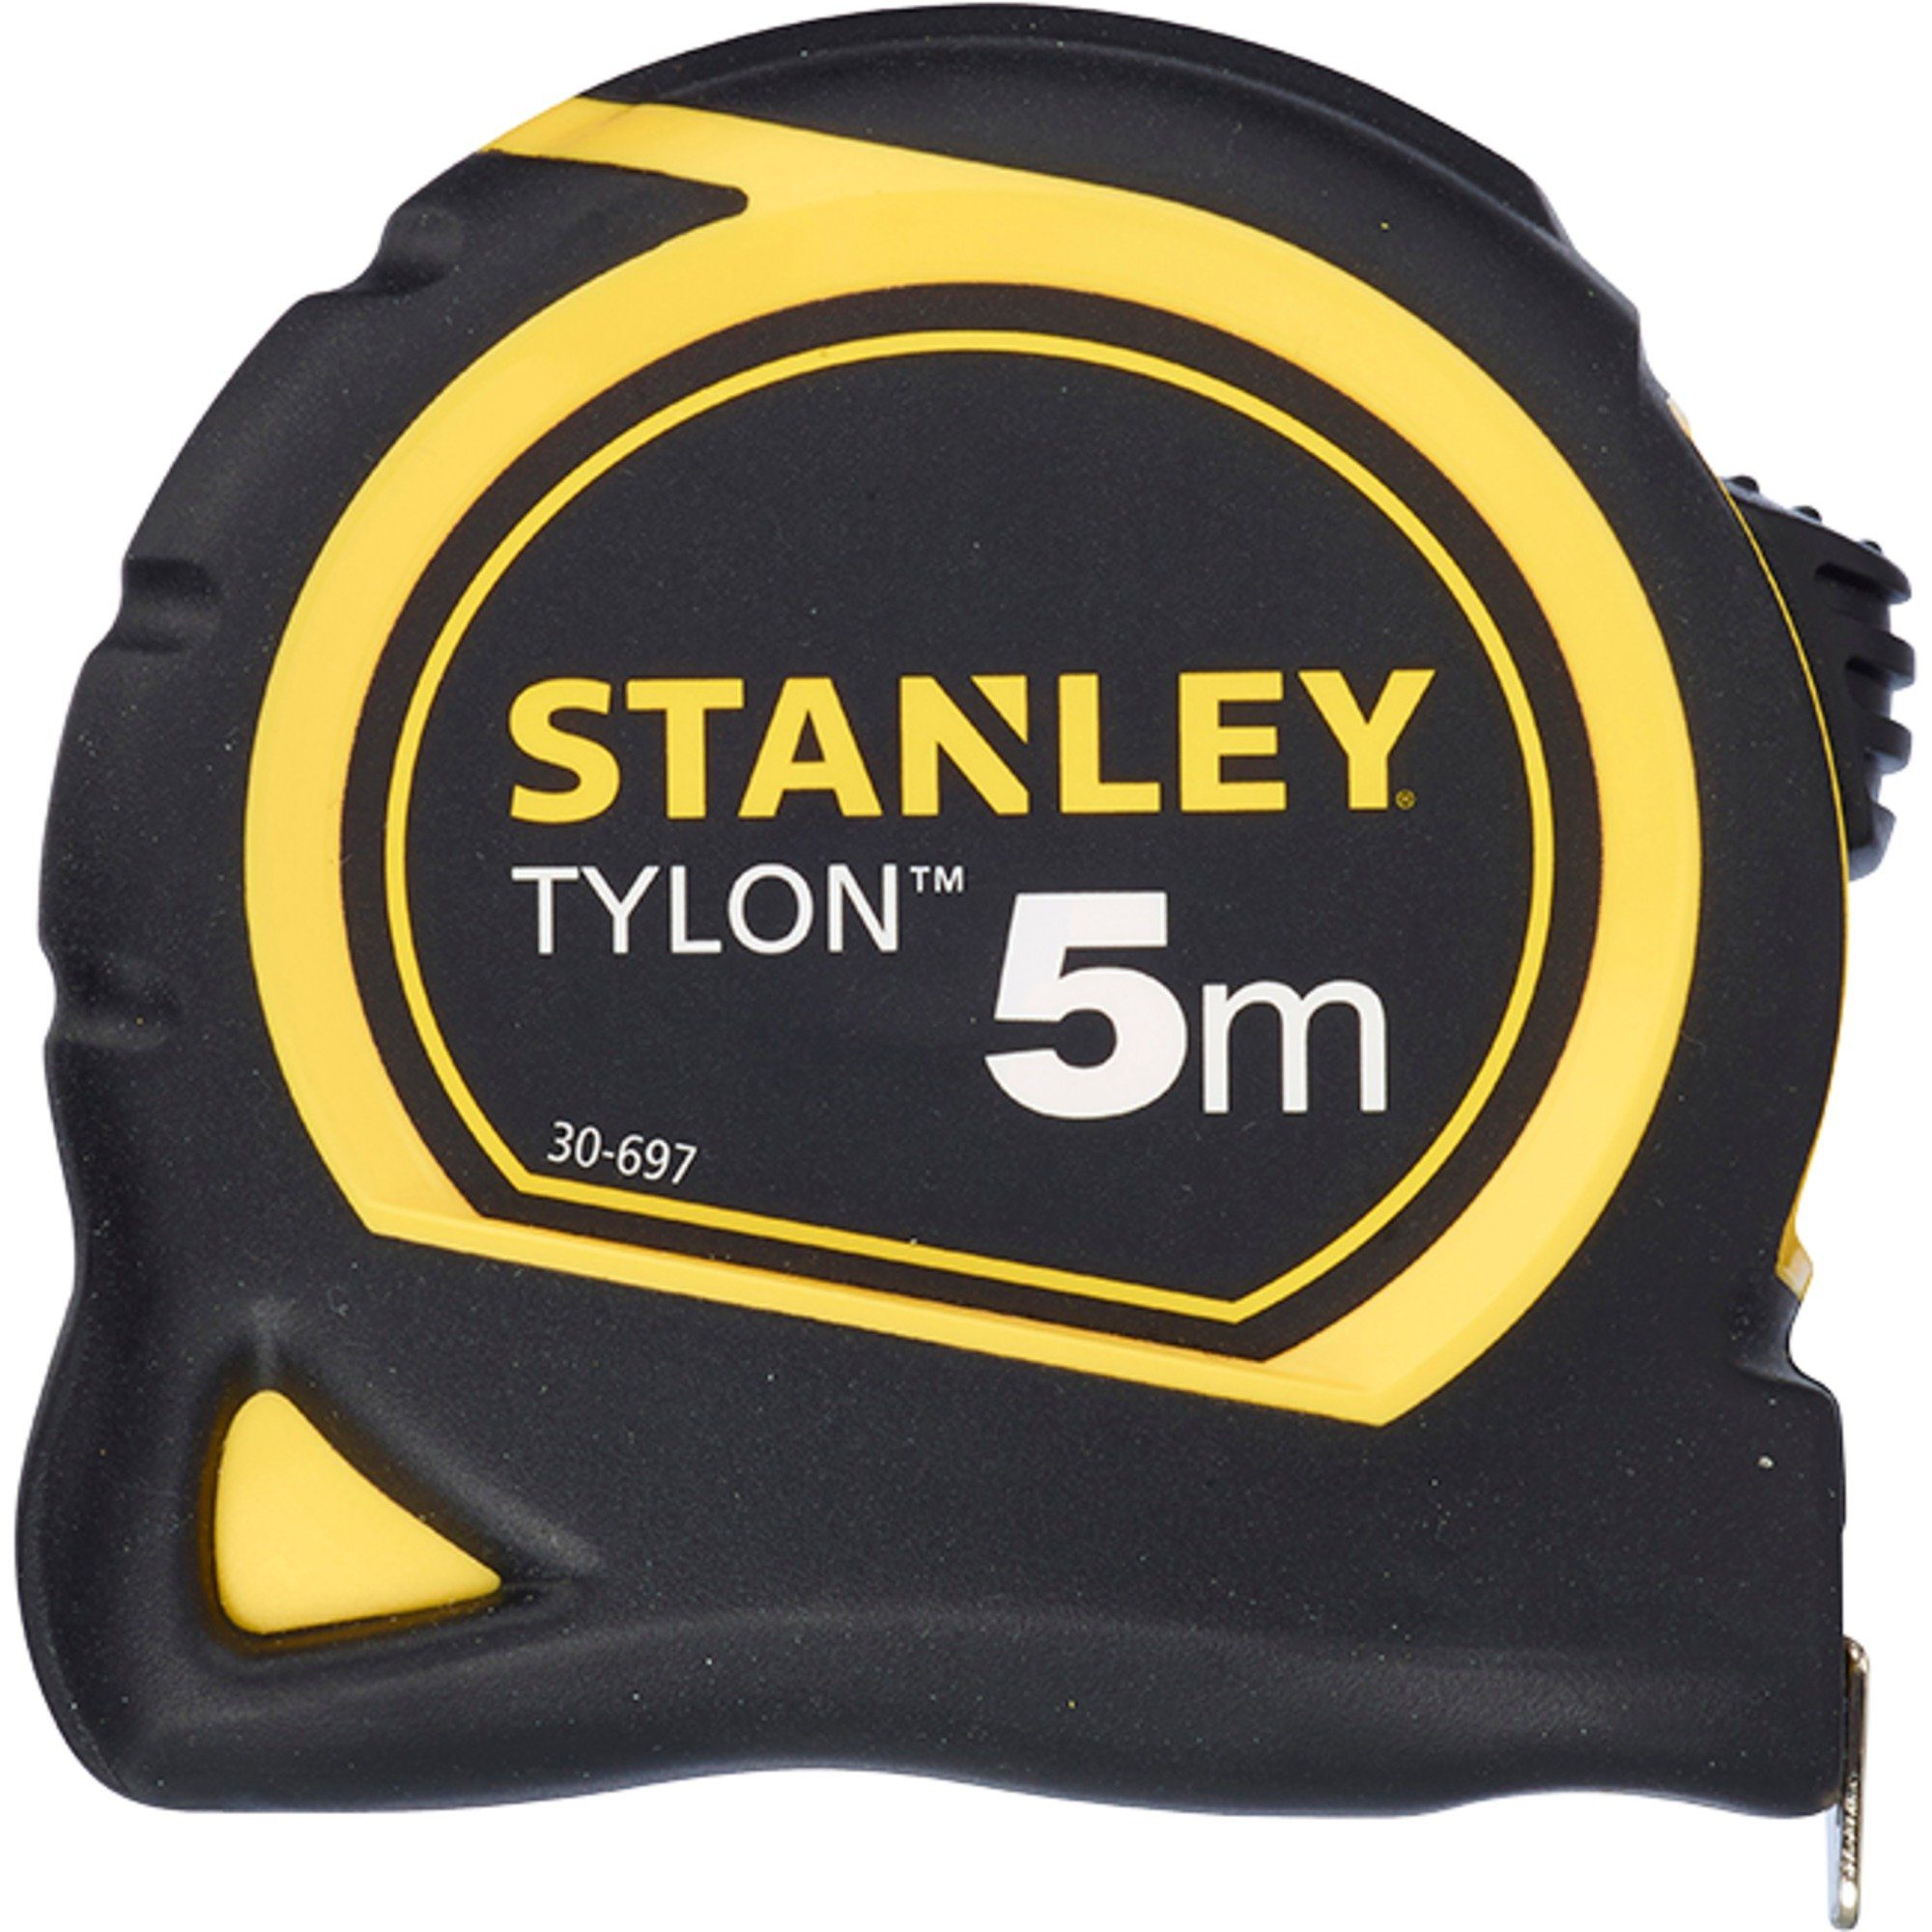 Bandmaß Meter Stanley 5 STANLEY Tylon, Maßband